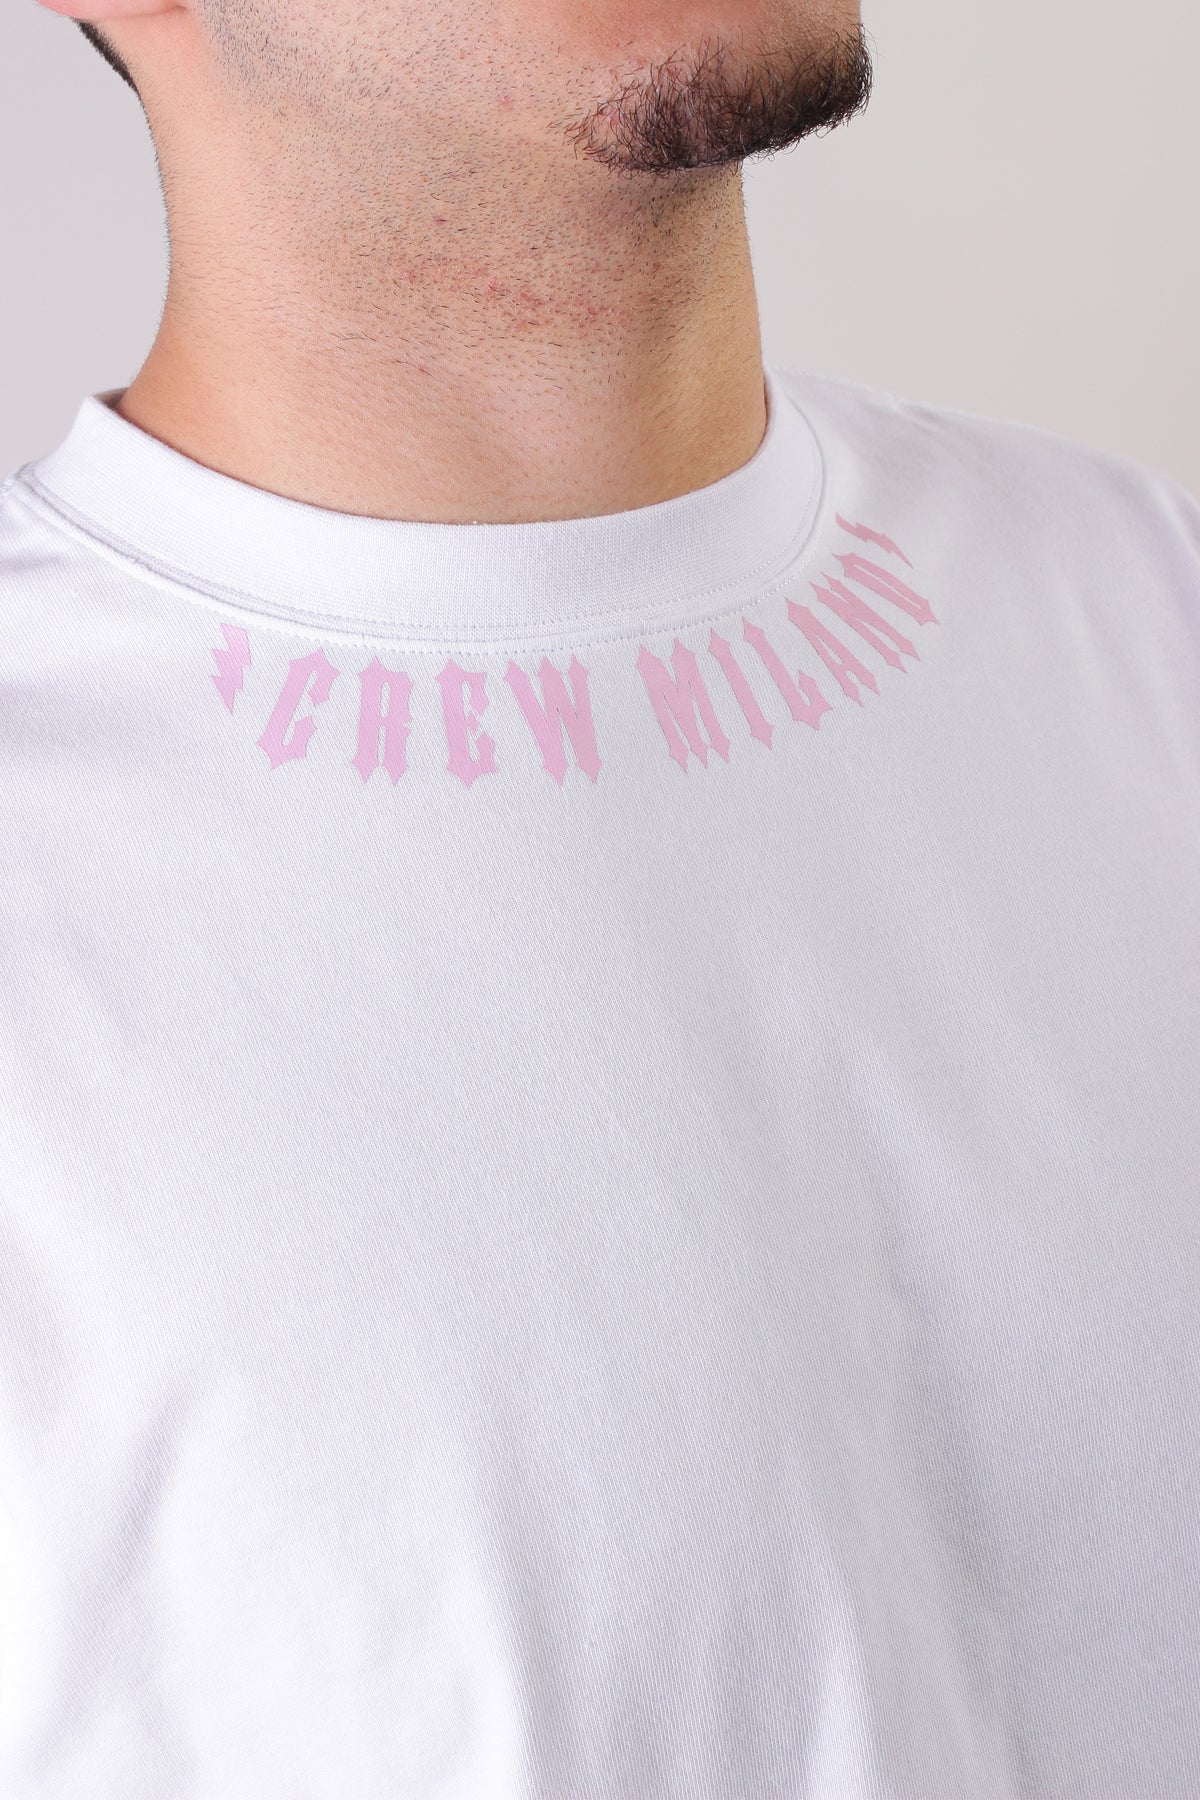 CREW Milano DUBAI White/Pink T-Shirt